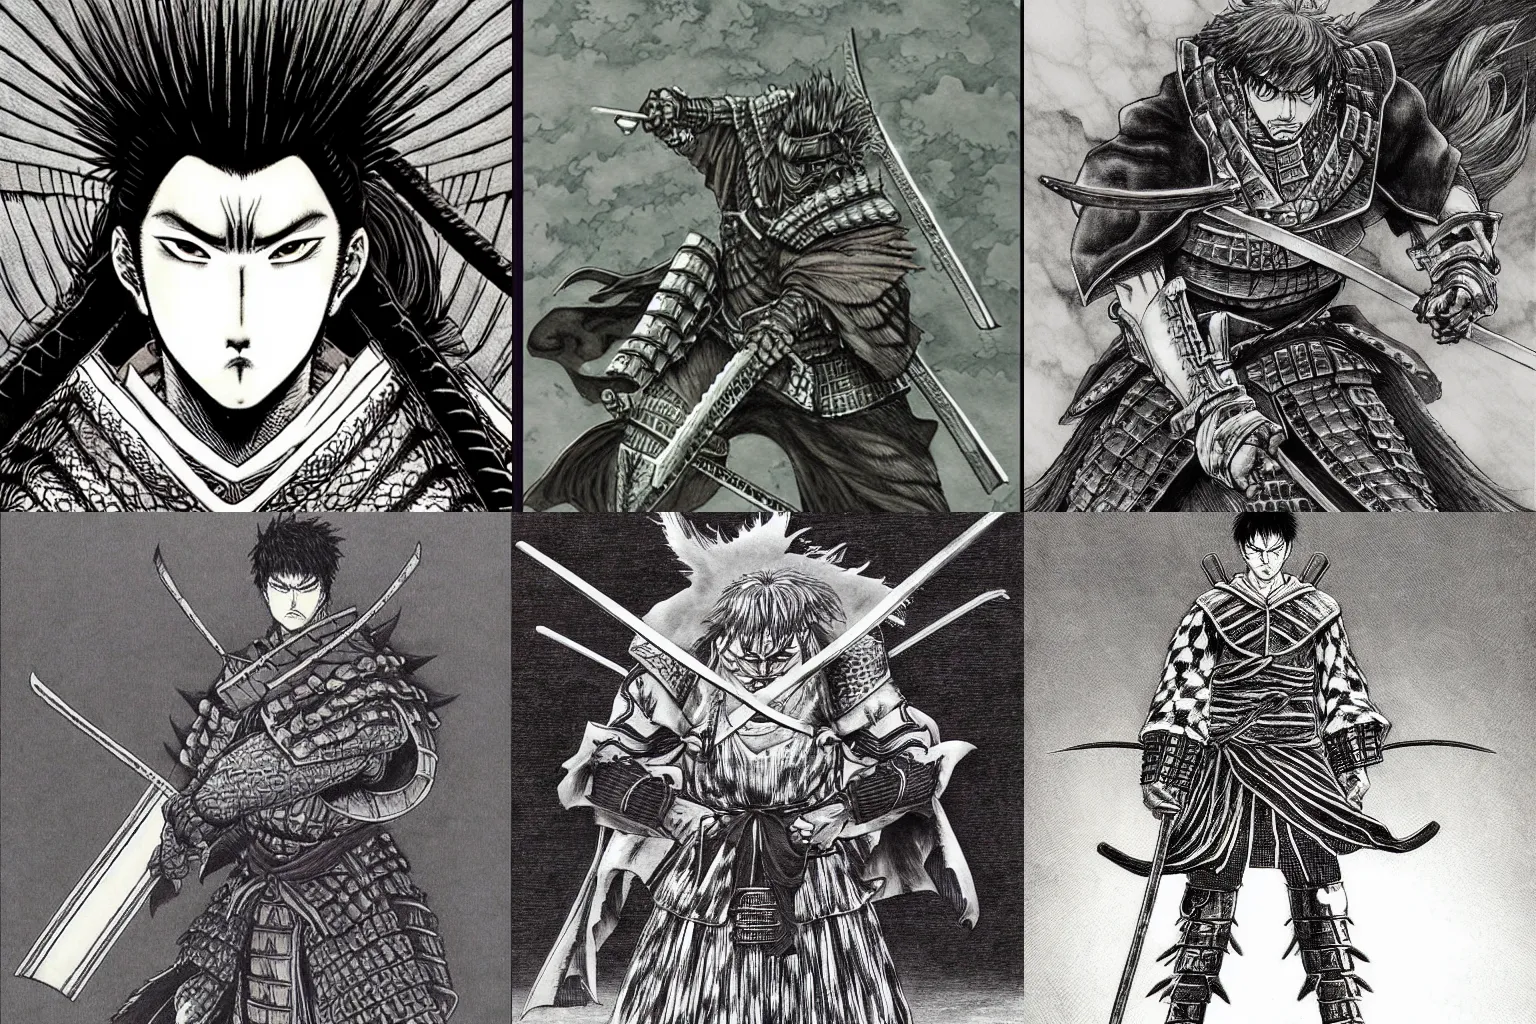 Prompt: an epic samurai by kentaro miura,